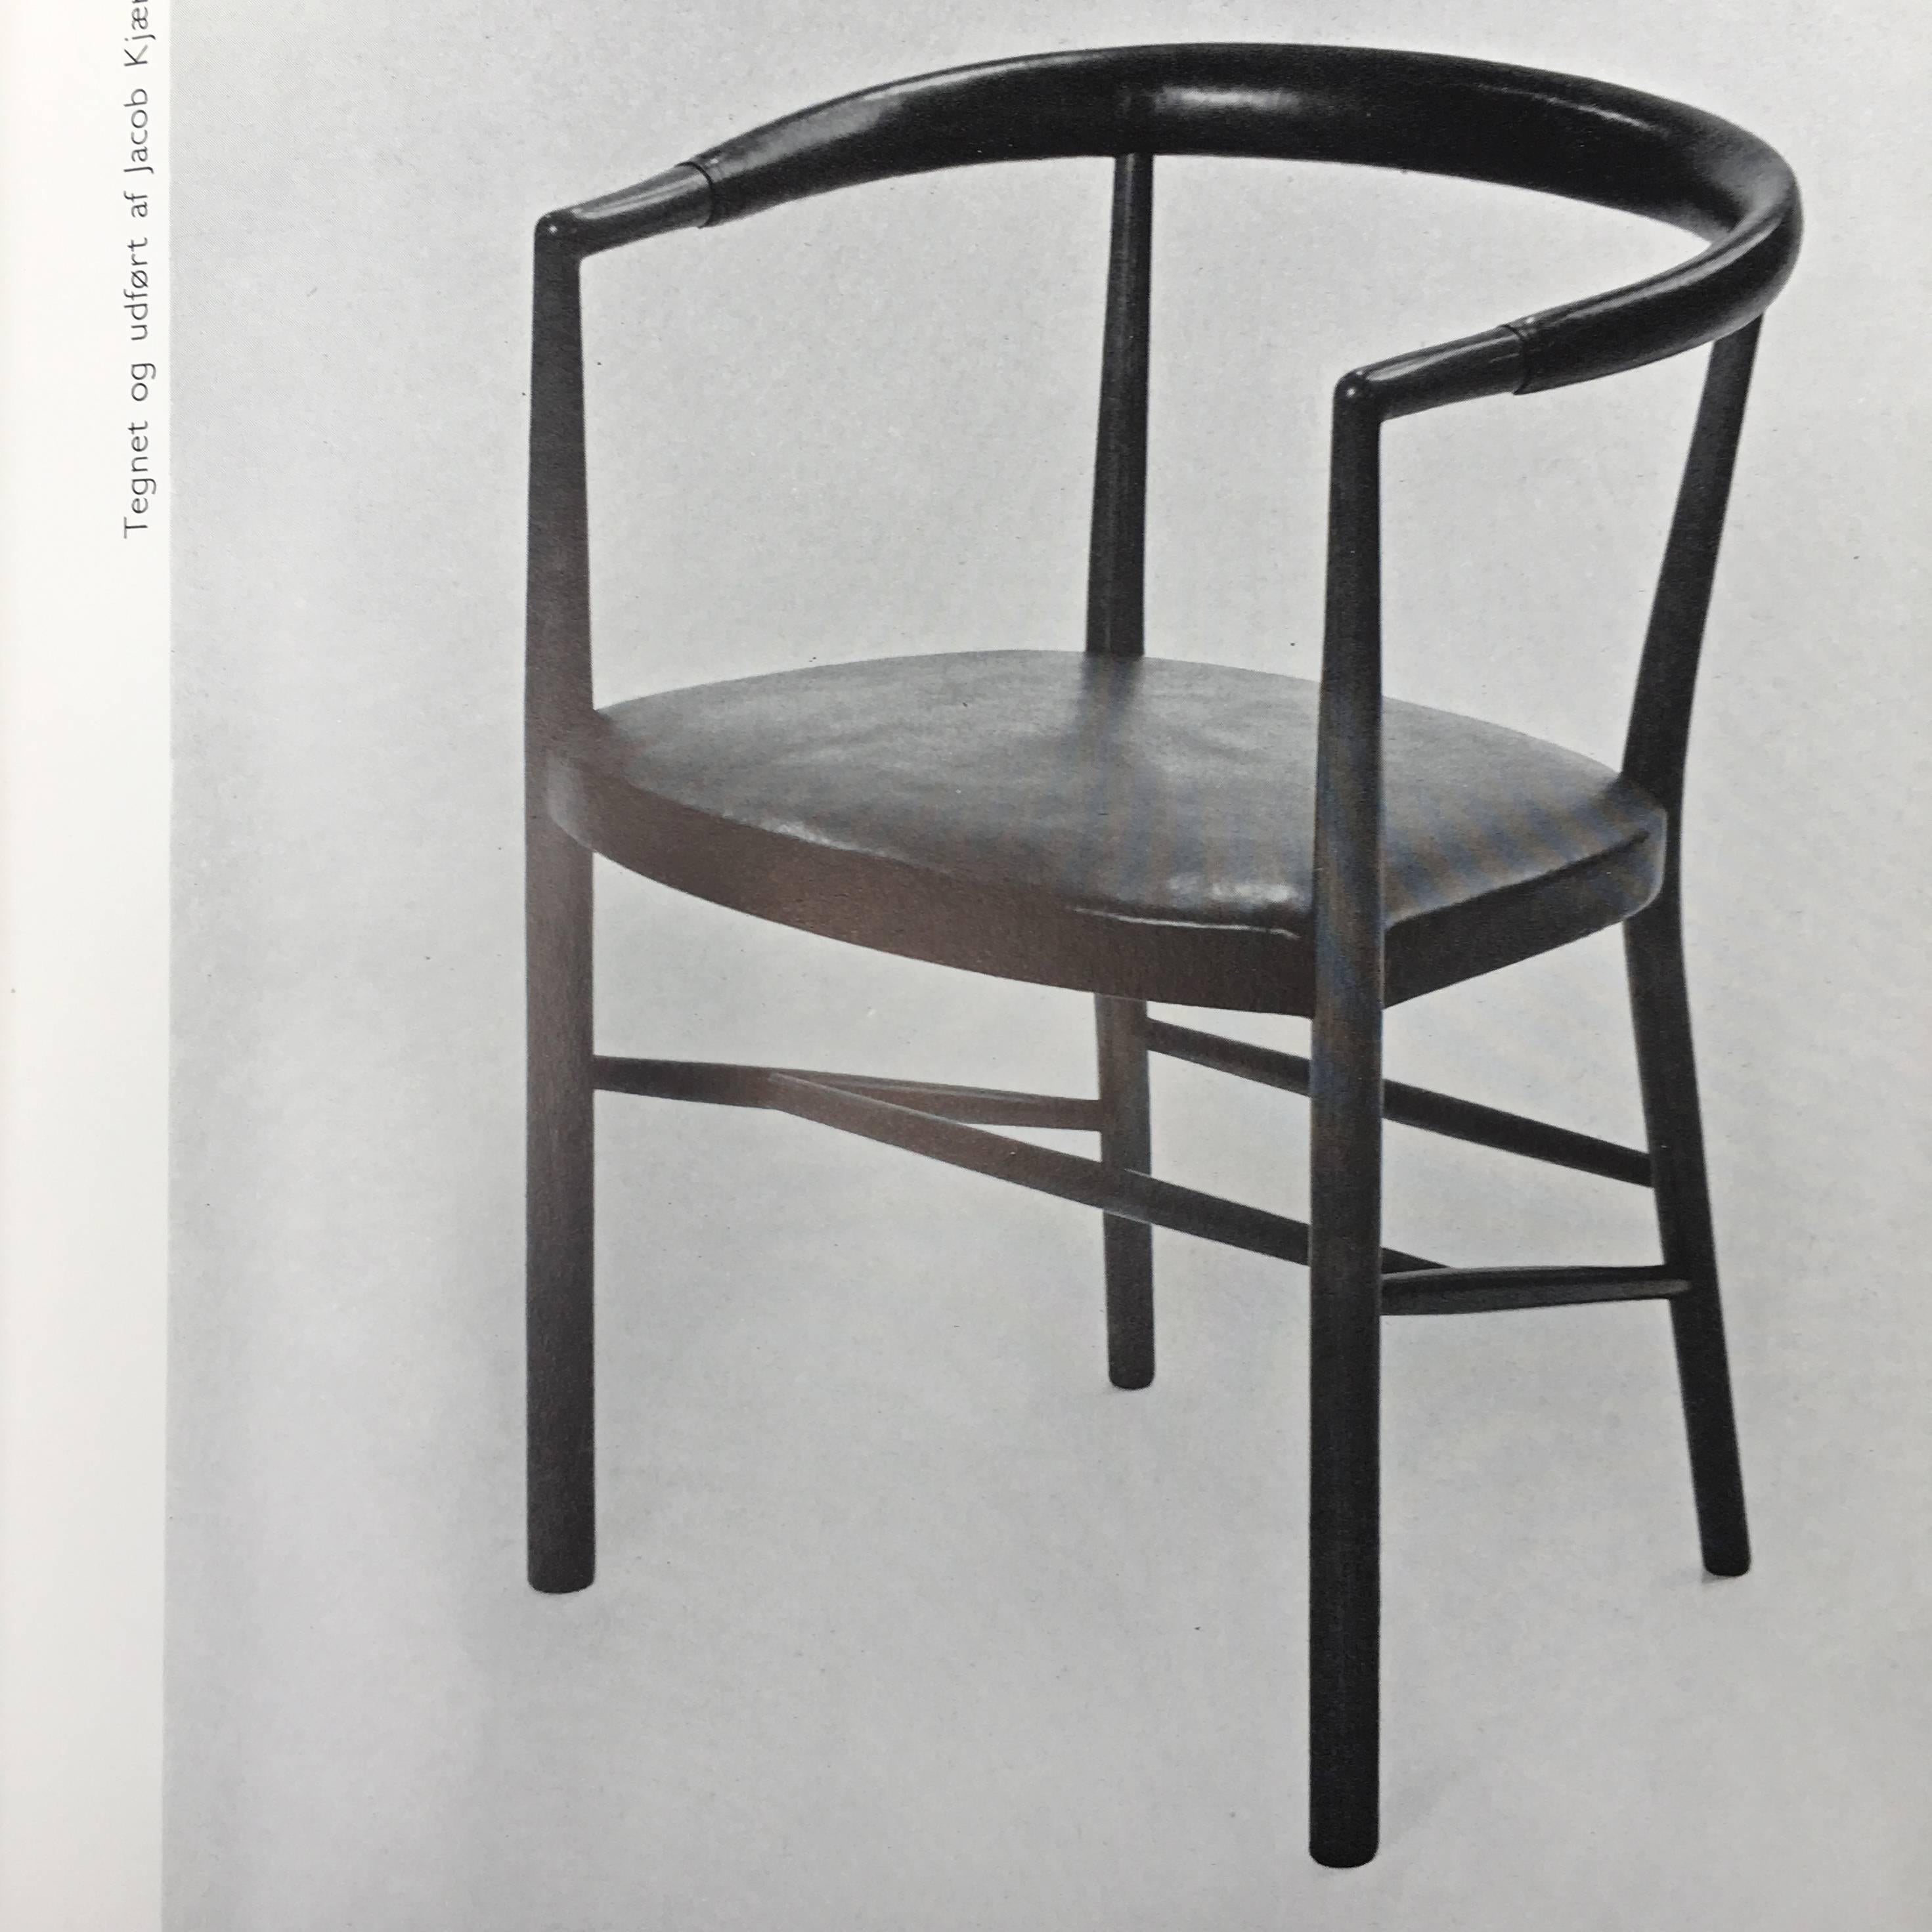 Paper Danske Stole Danish Chairs, 1954 For Sale